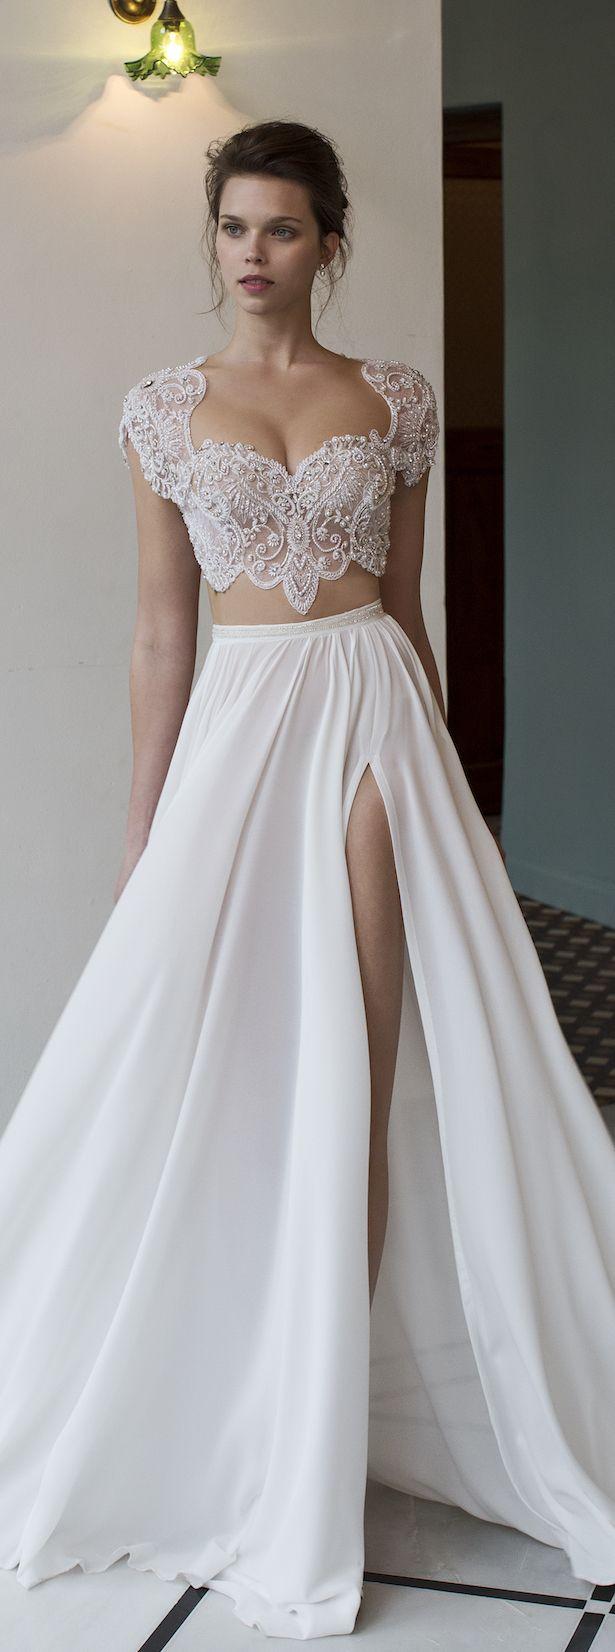 زفاف - Bridal Trends: Two- Piece Wedding Dresses